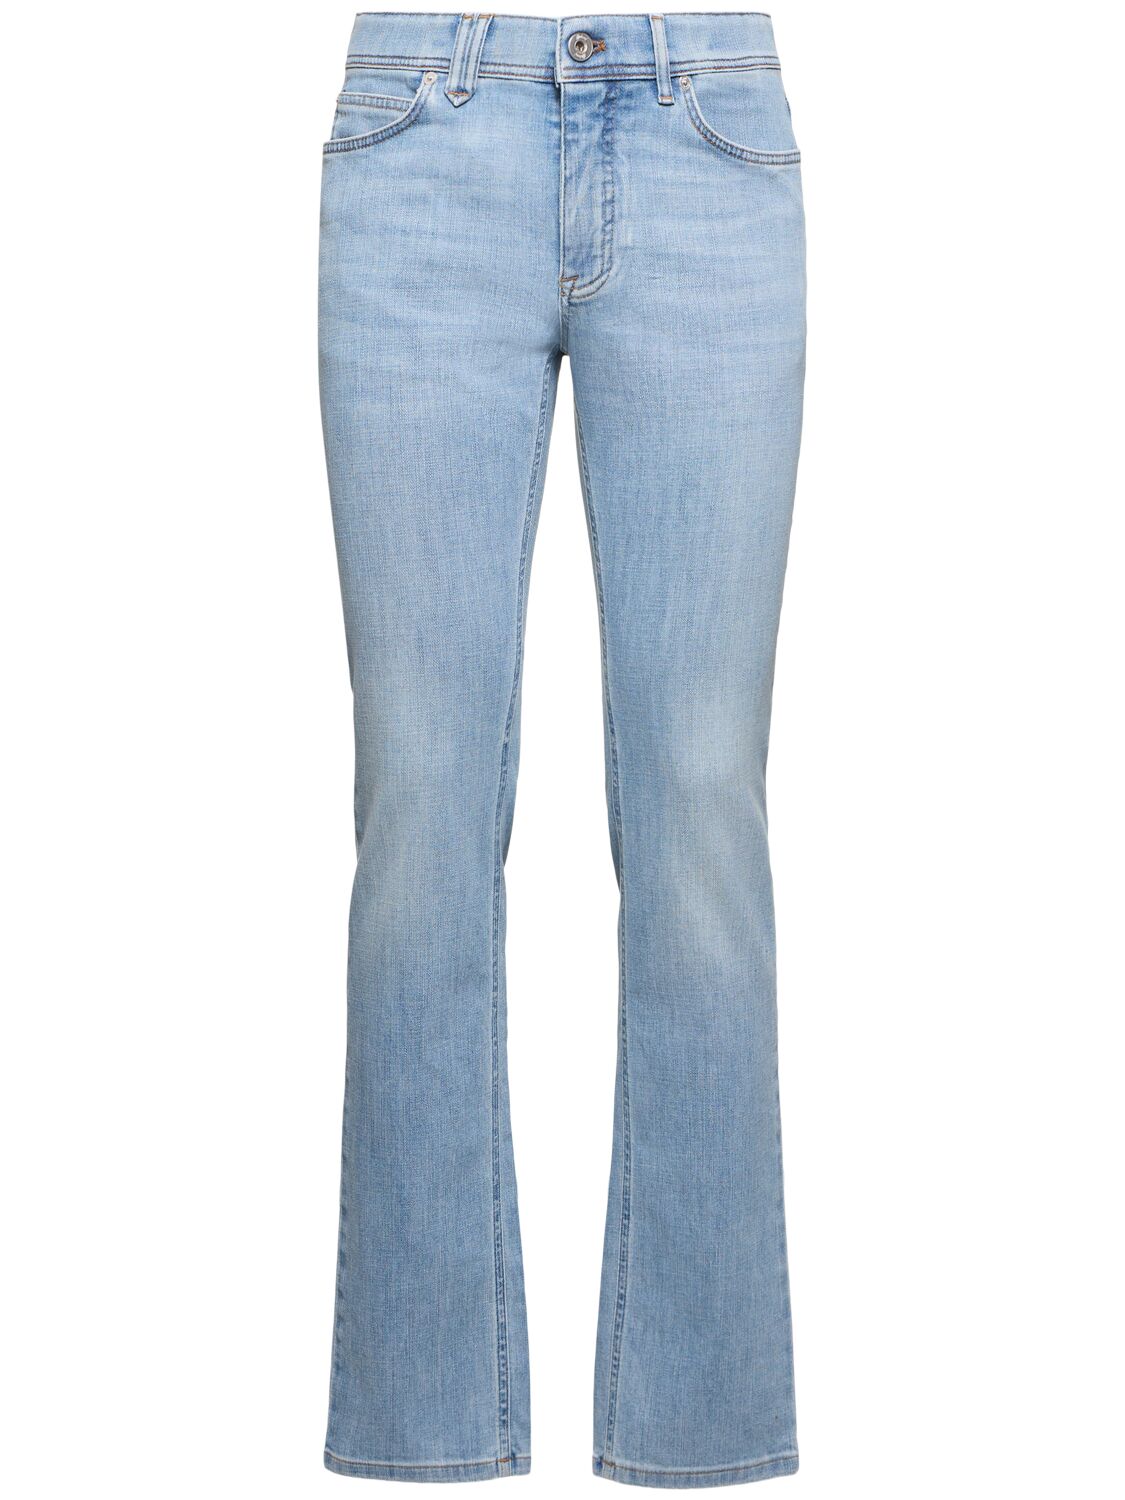 Brioni Meribel Stretch Cotton Denim Jeans In Bright Blue